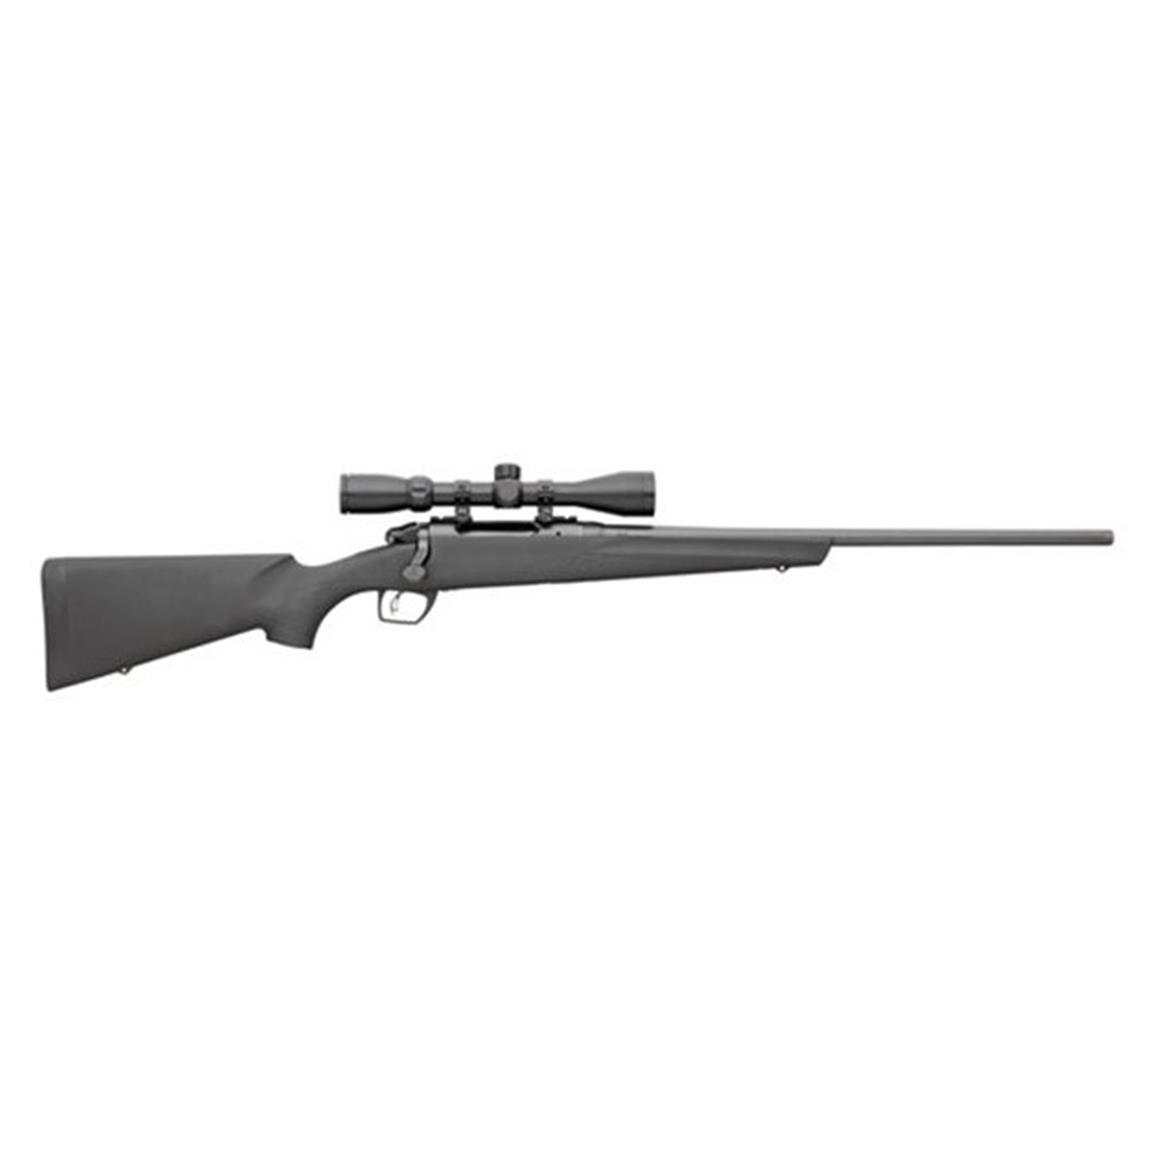 Remington 783, Bolt Action, .300 Winchester Magnum, 3-9x40mm Scope, 3 Rounds